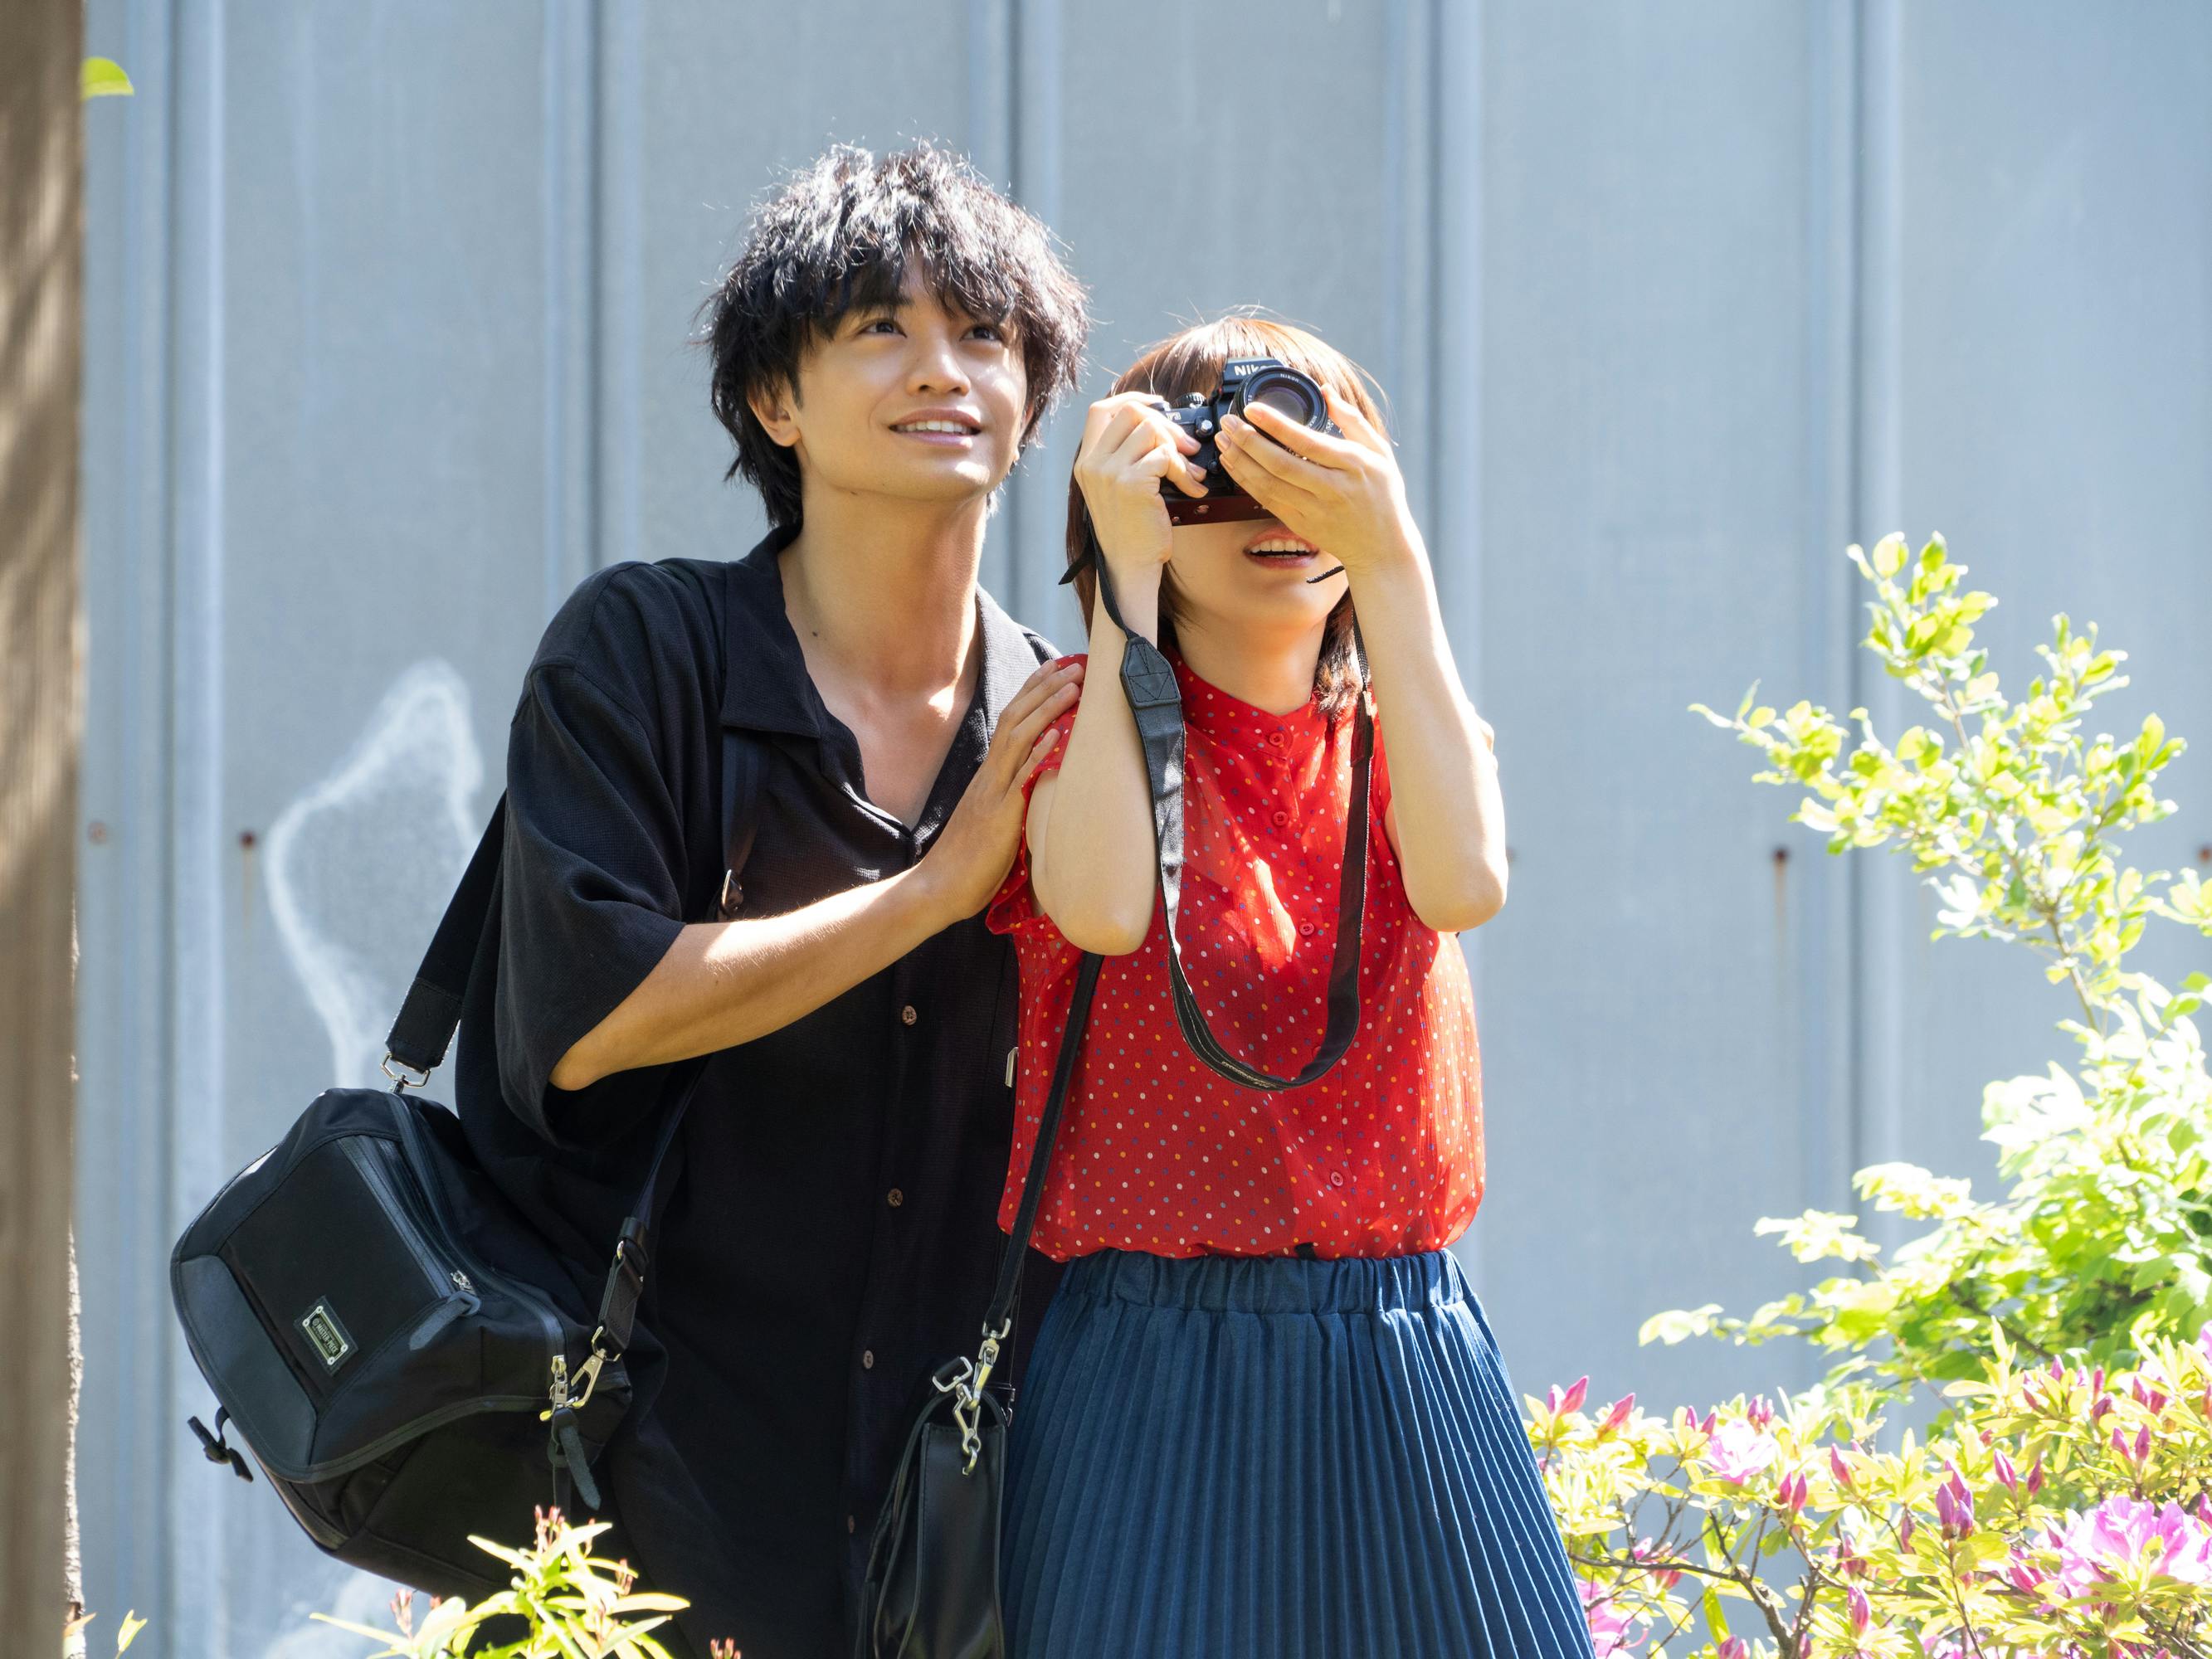 Kento Nakajima and Honoka Matsumoto take a picture together in the sunshine.